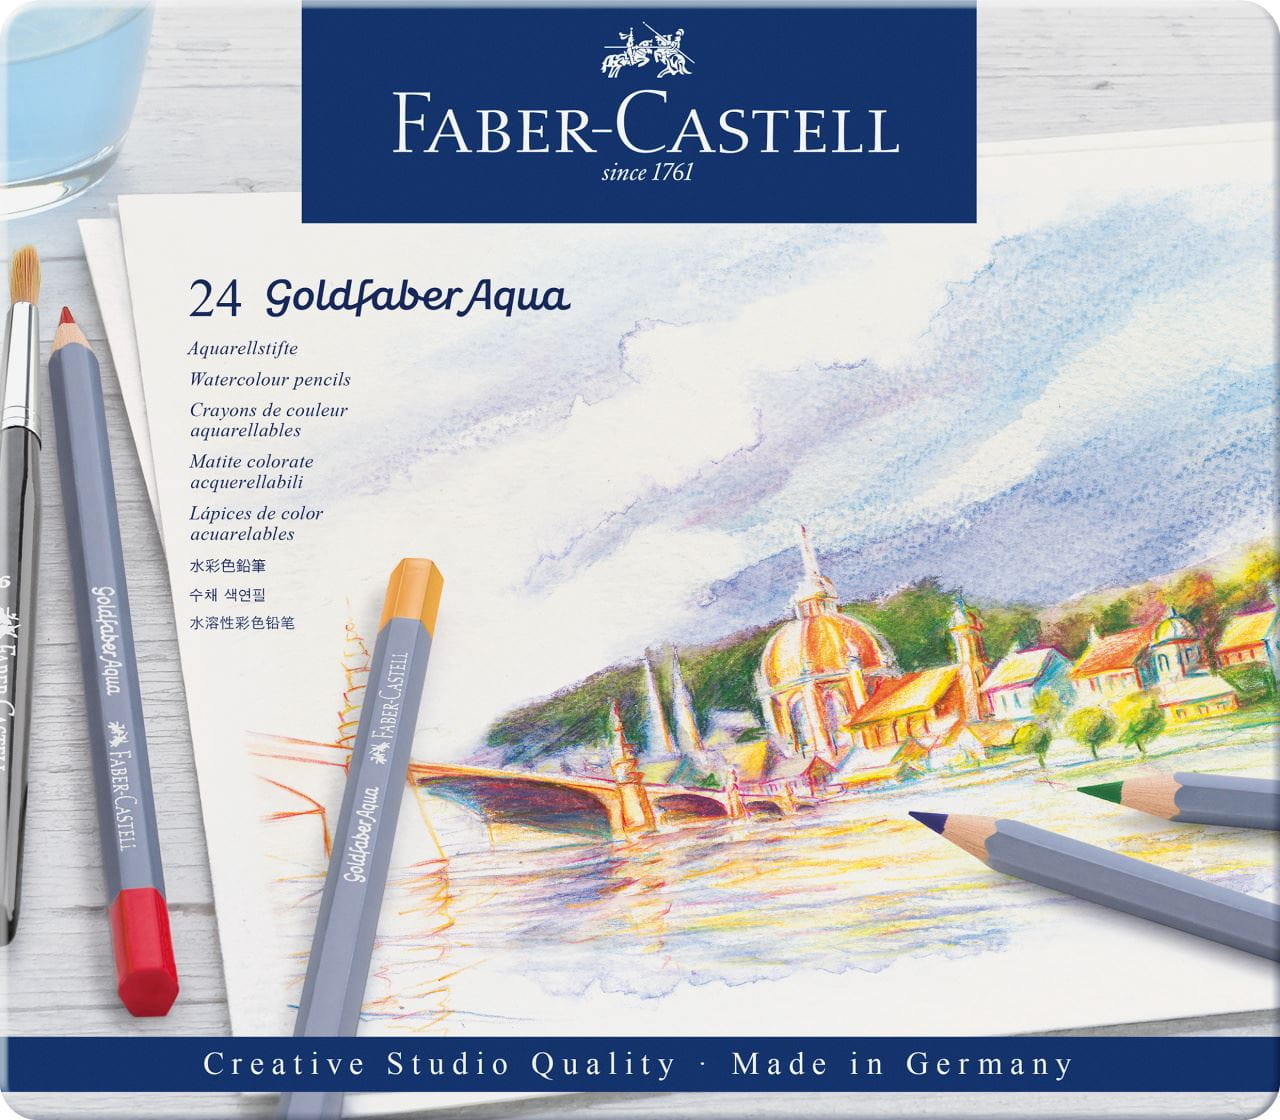 Faber-Castell - Goldfaber Aqua watercolour pencil, tin of 24